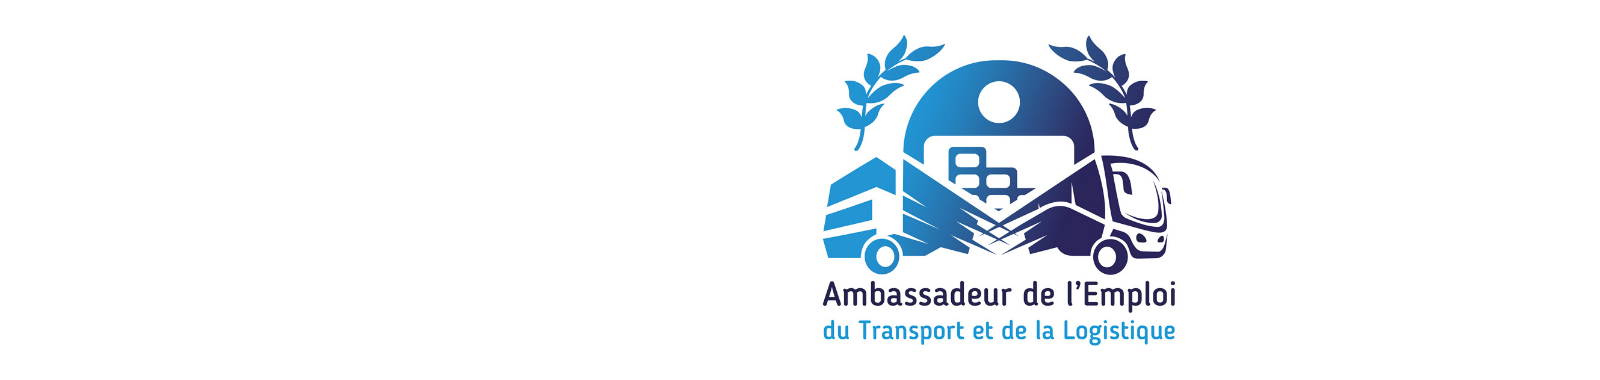 Logo Ambassadeur de l'Emploi Transport Logistique AFT